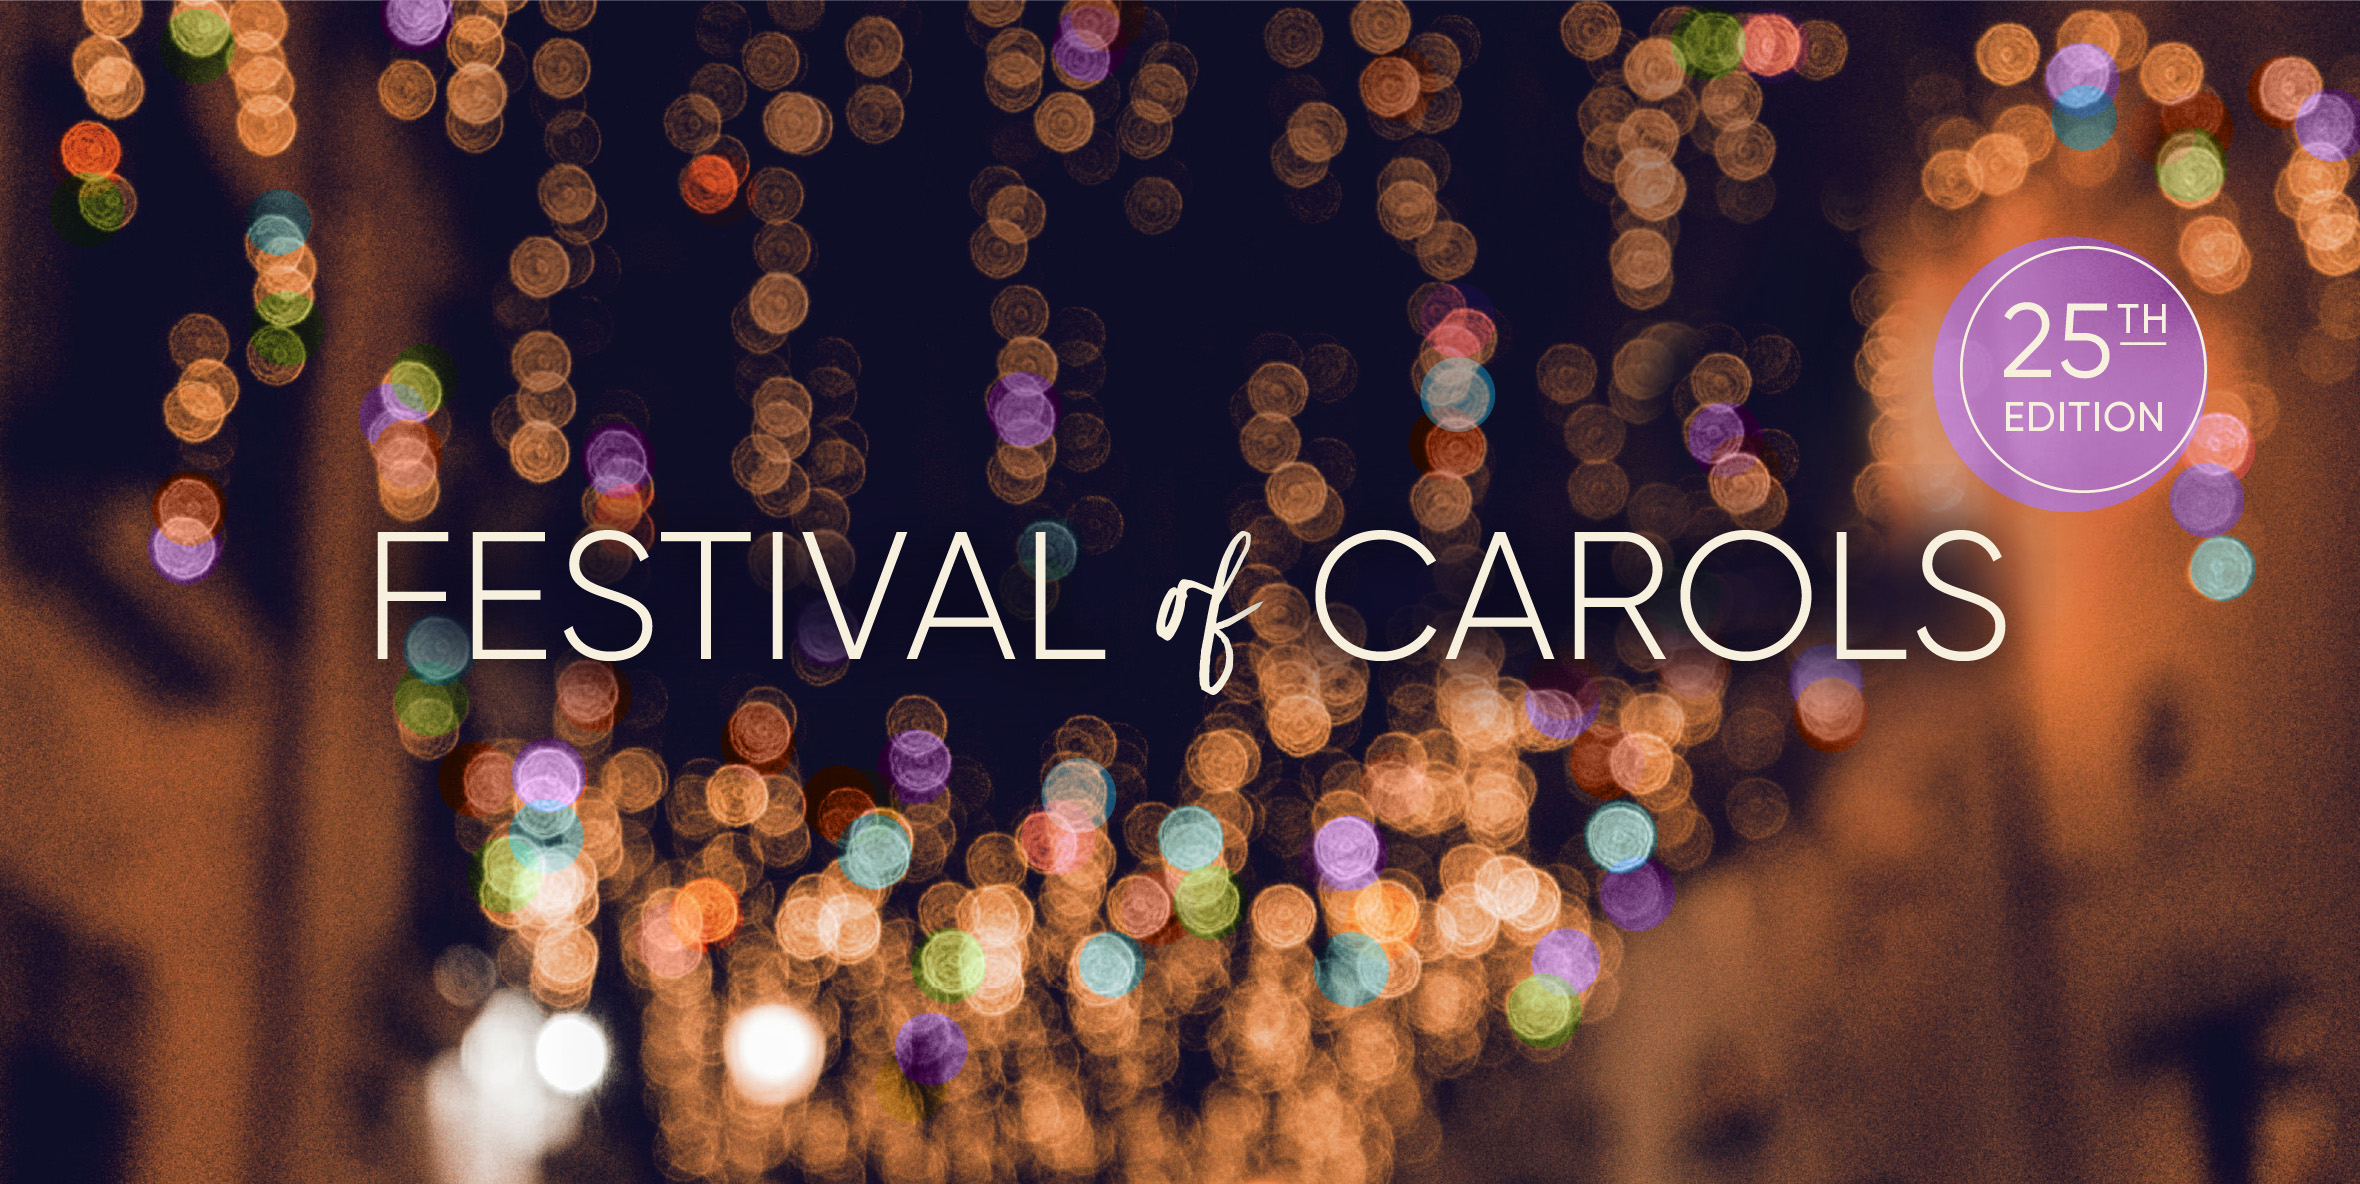 Festival of Carols concert